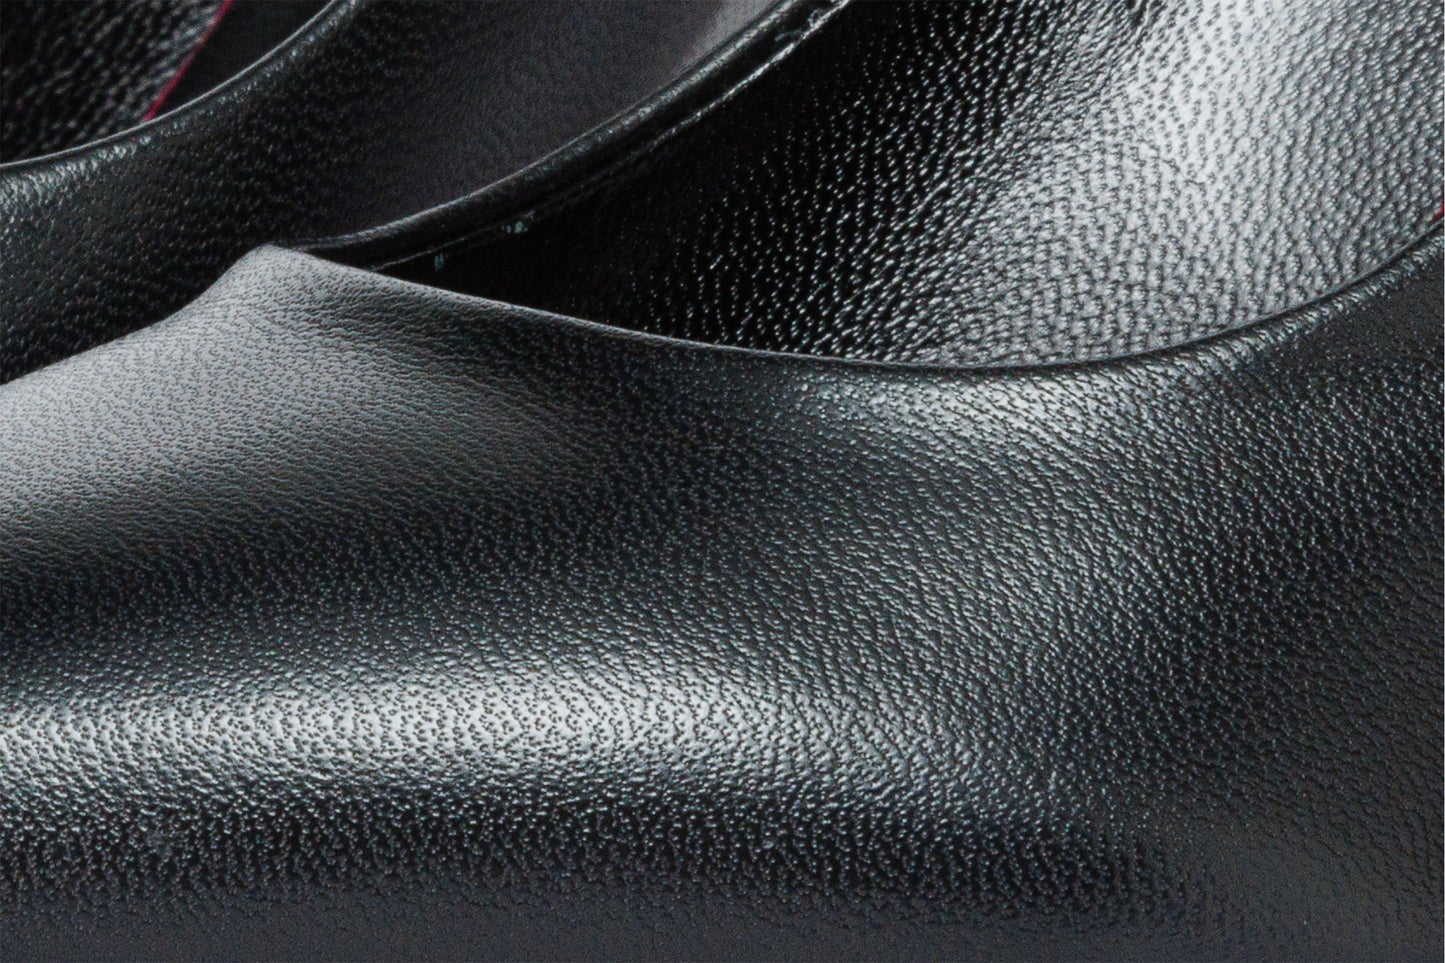 The Ege Black Leather Pump Fuchsia Sole Women Shoe